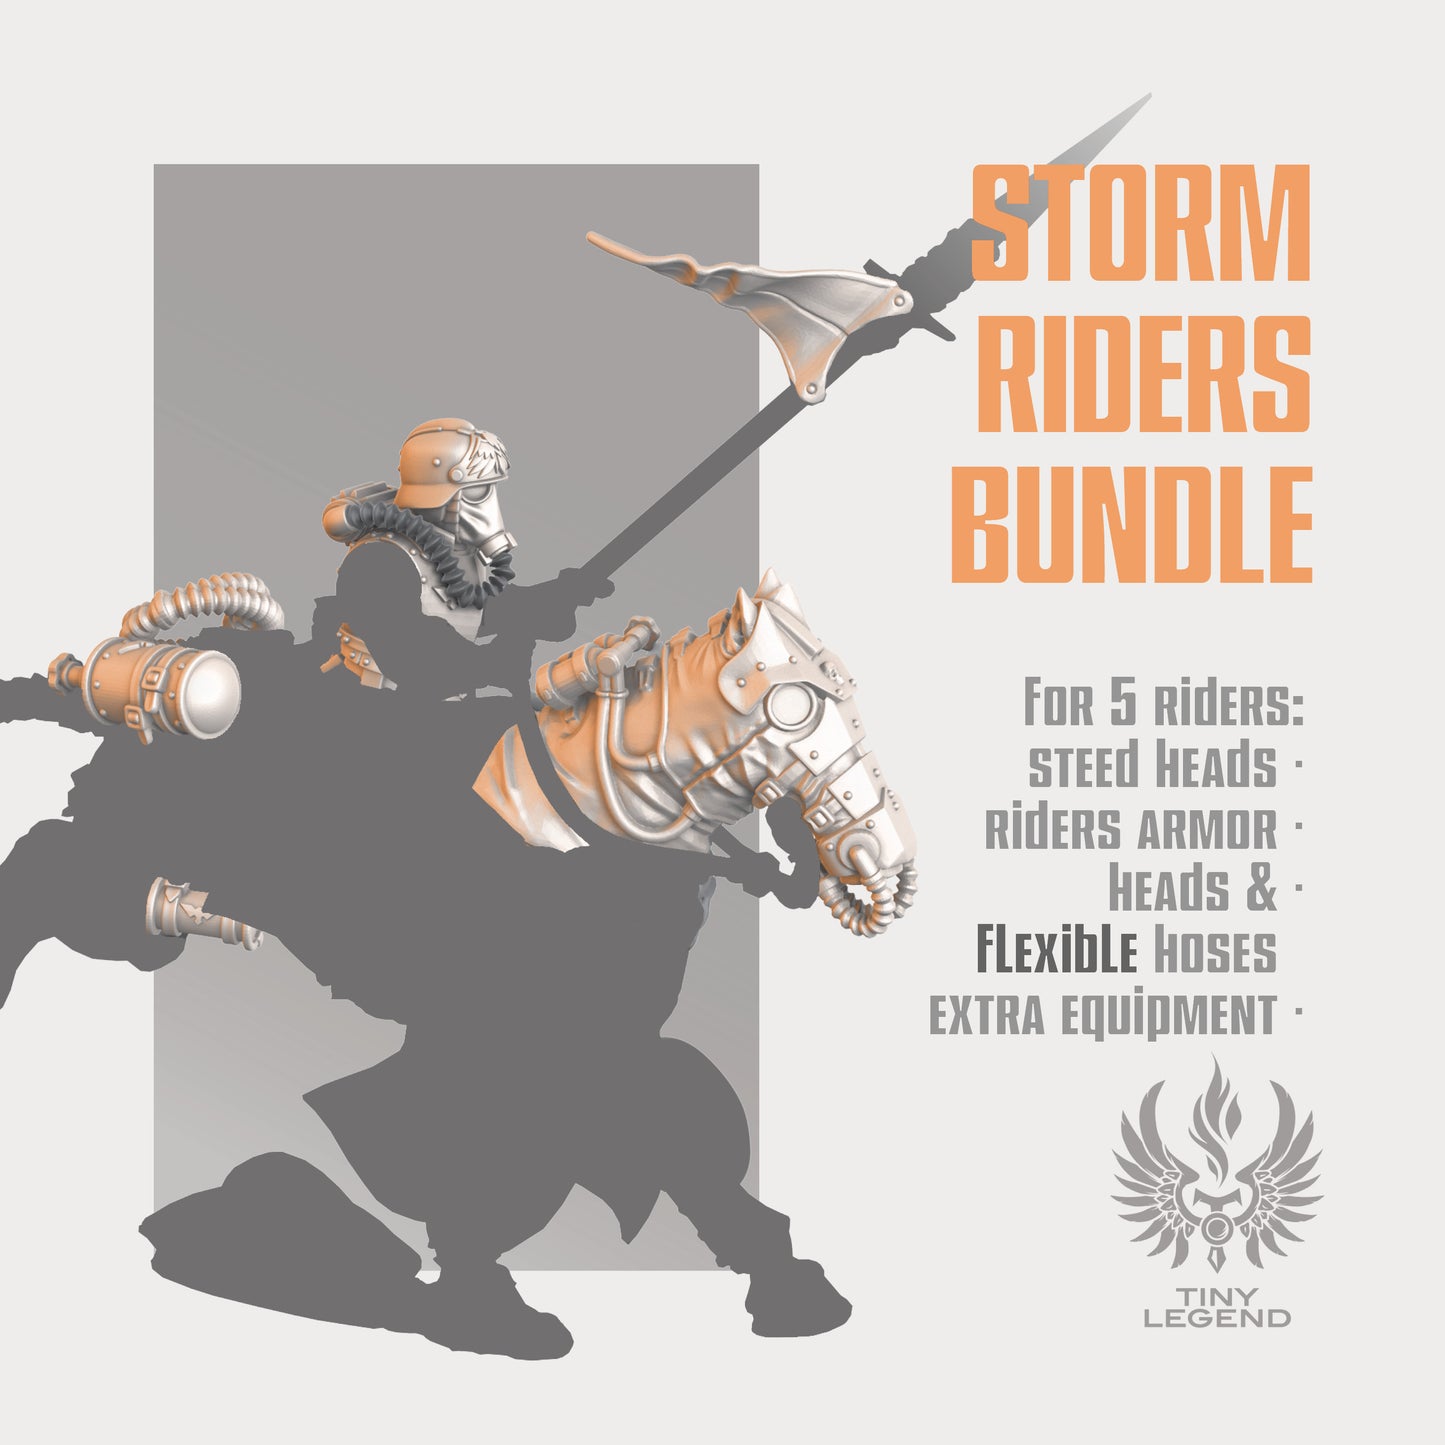 Storm riders kit